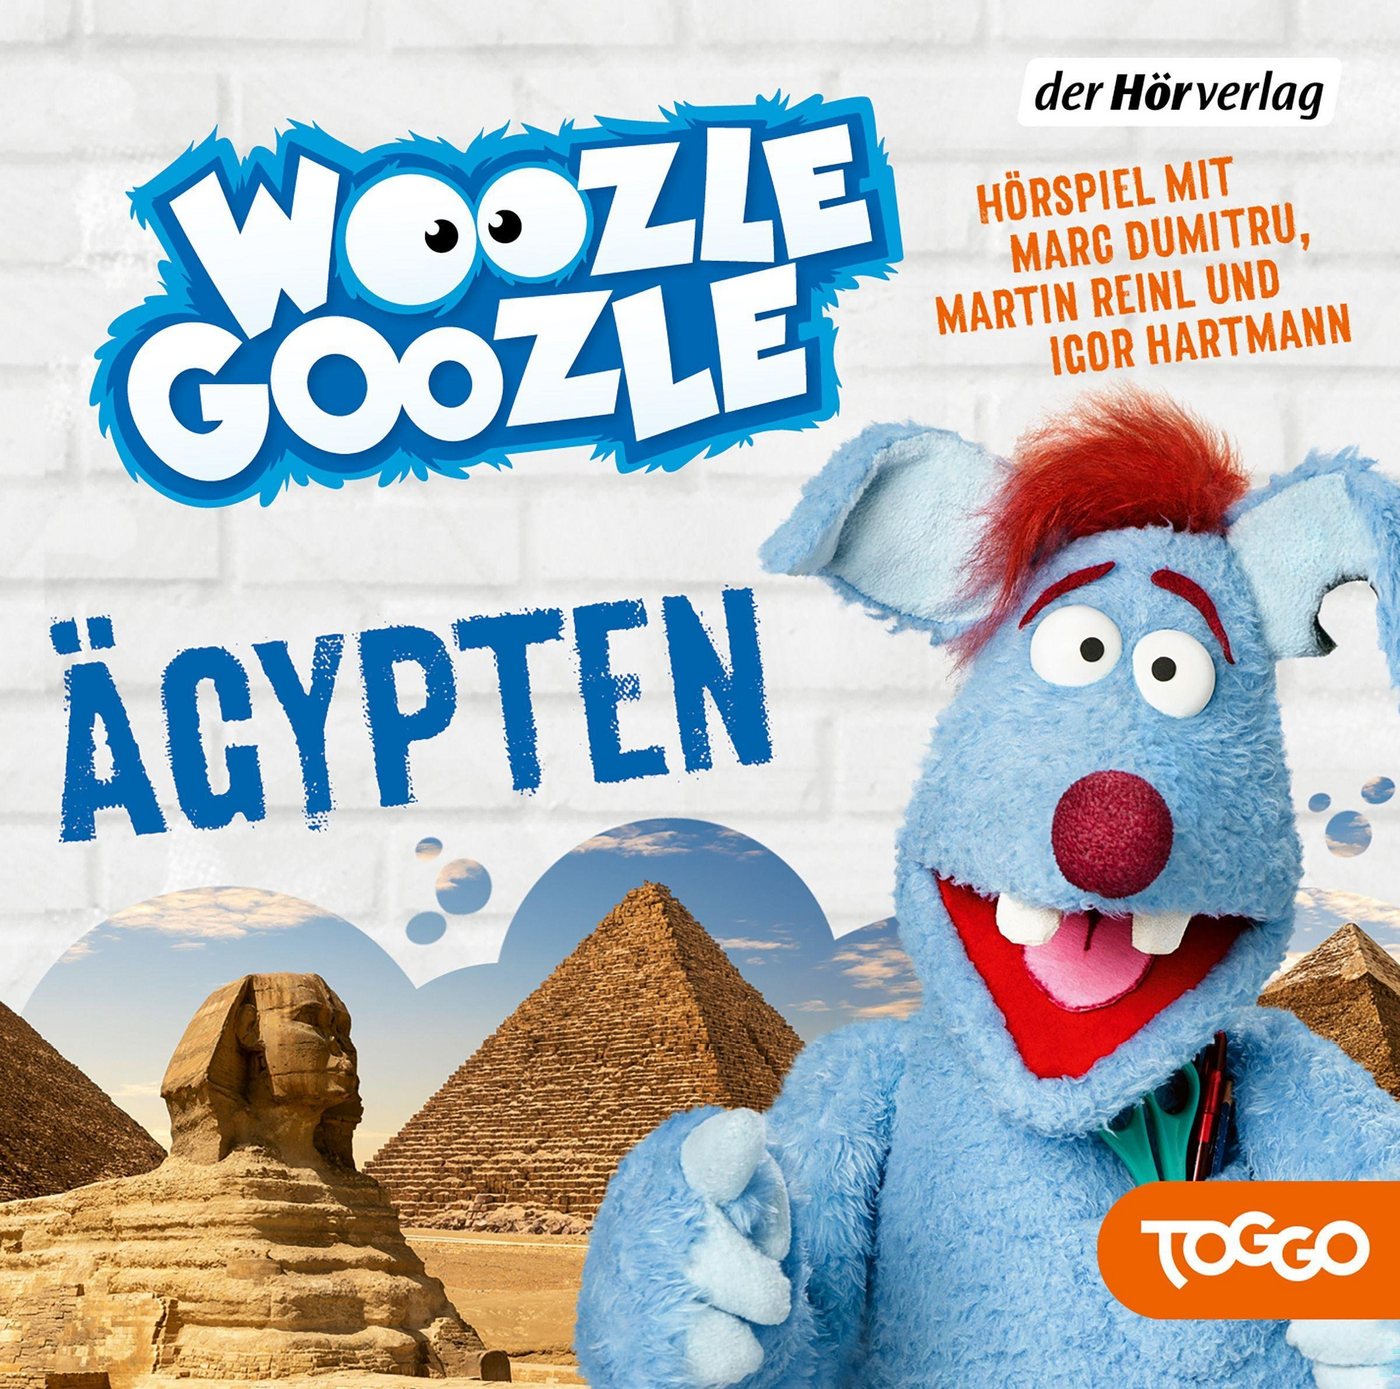 Der HörVerlag Hörspiel-CD Woozle Goozle - Ägypten von Der HörVerlag